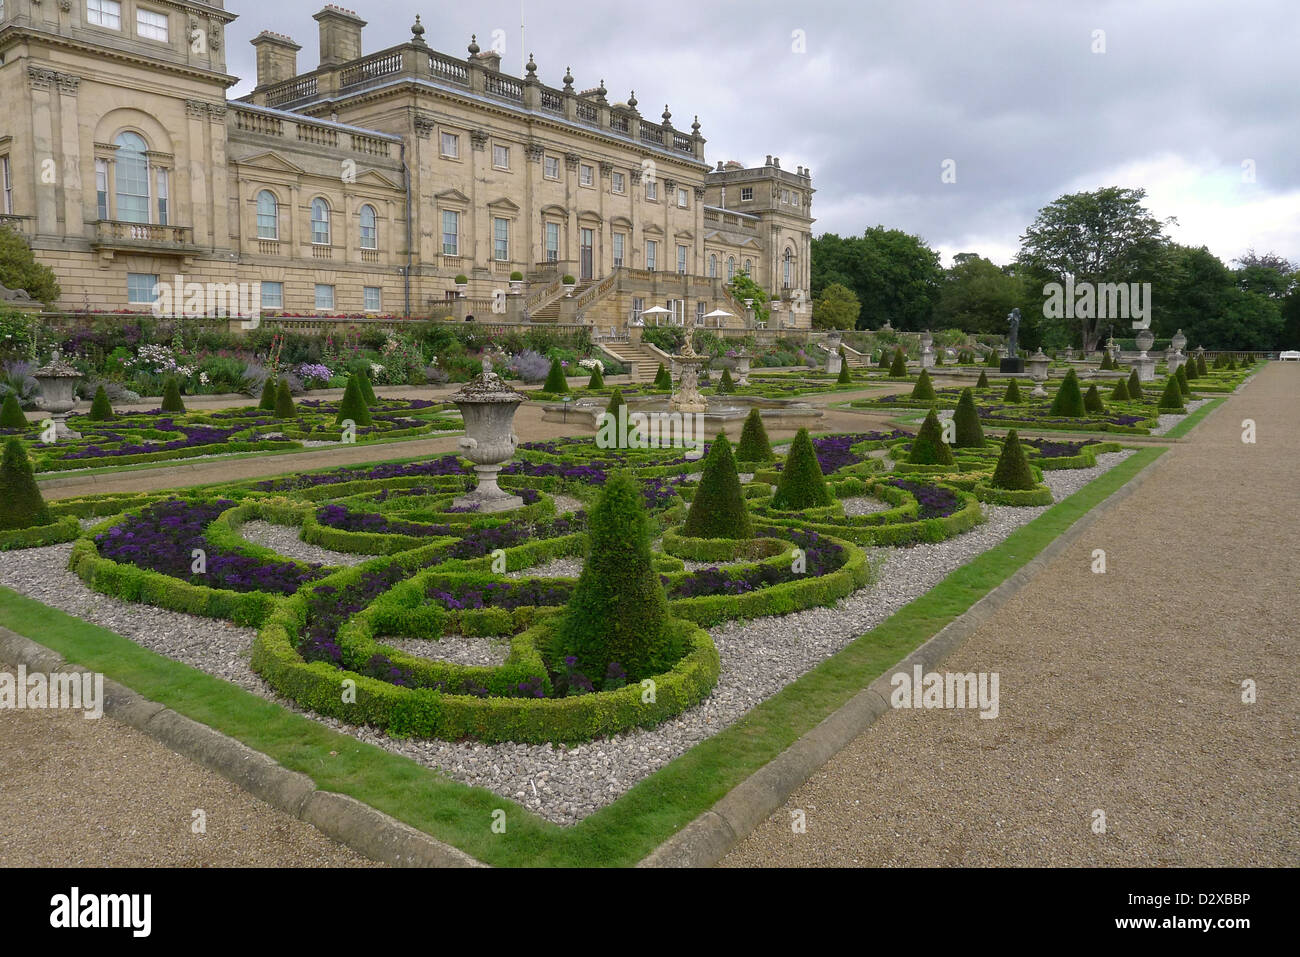 The elaborate formal garden display at Harewood house near Harrogate, Yorkshire UK. Stock Photo